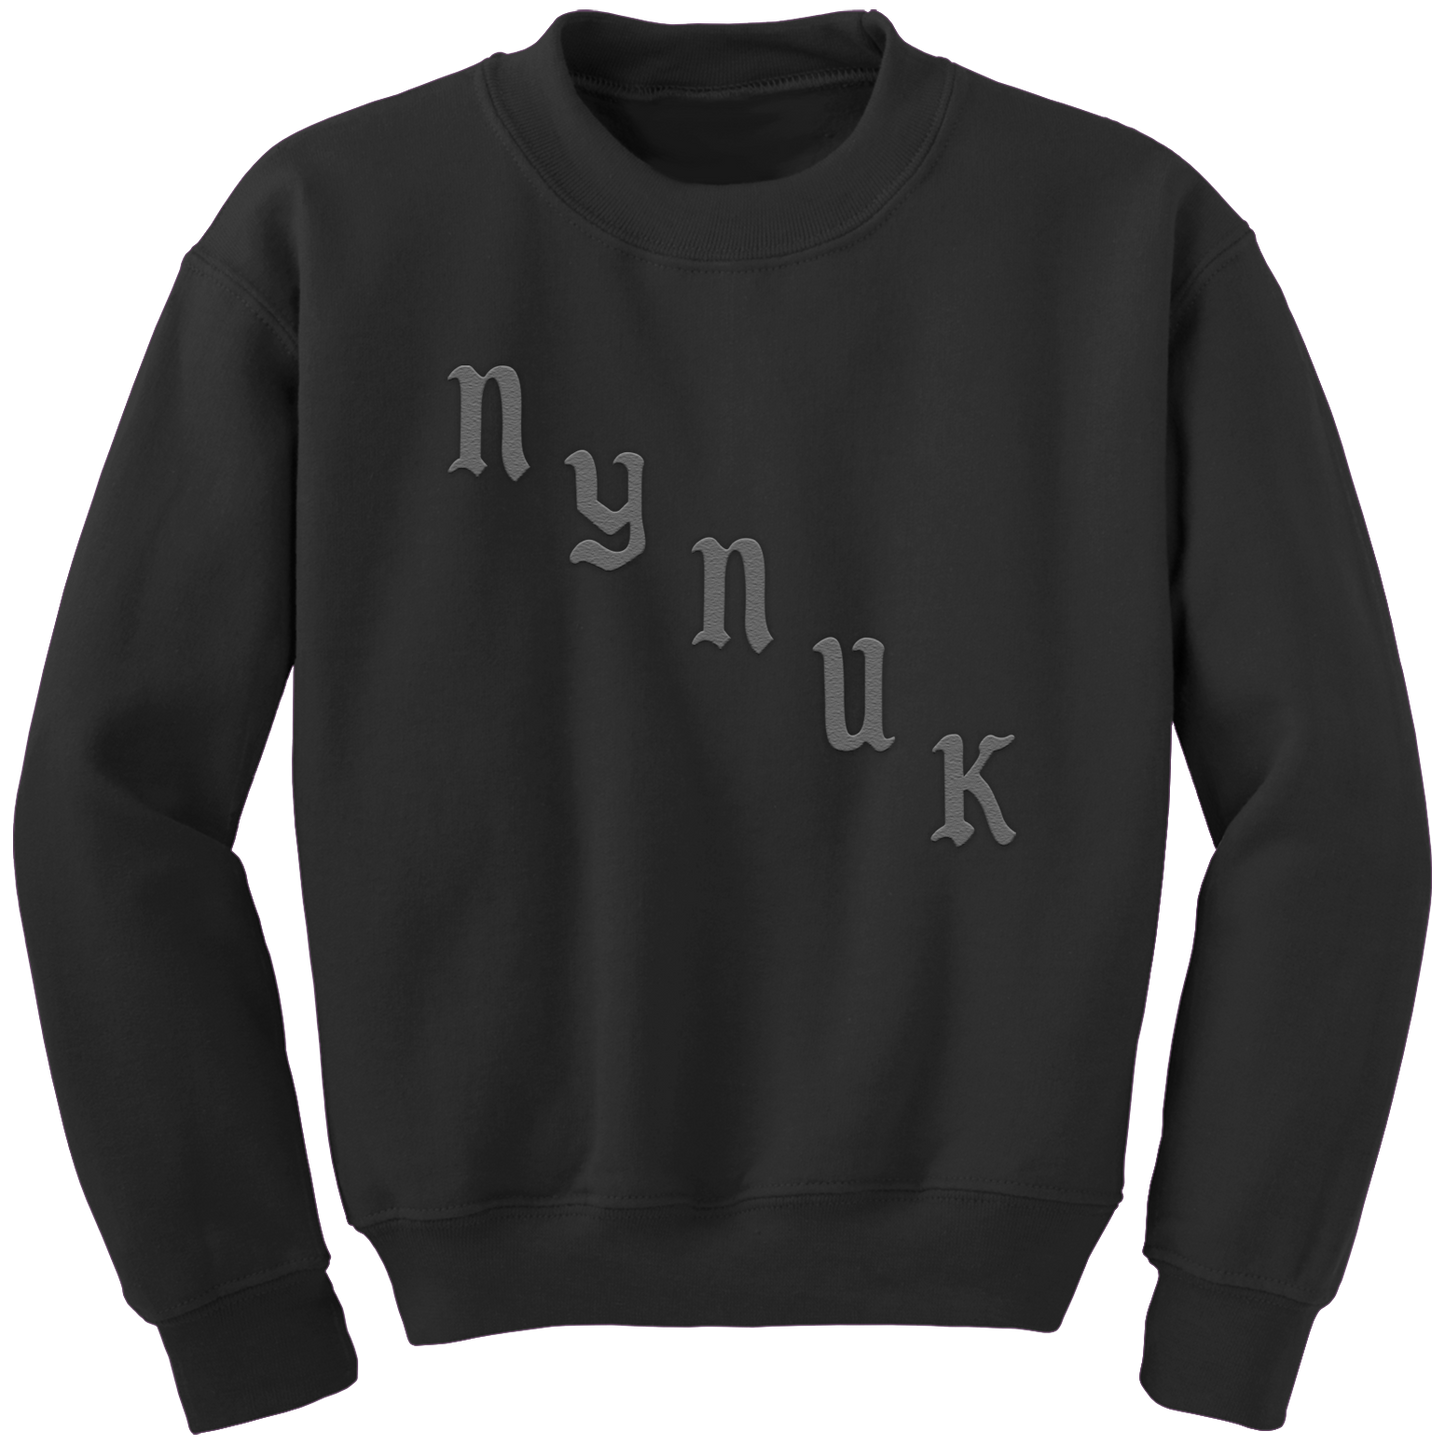 Limited Edition NYNUK Crewneck Sweatshirt